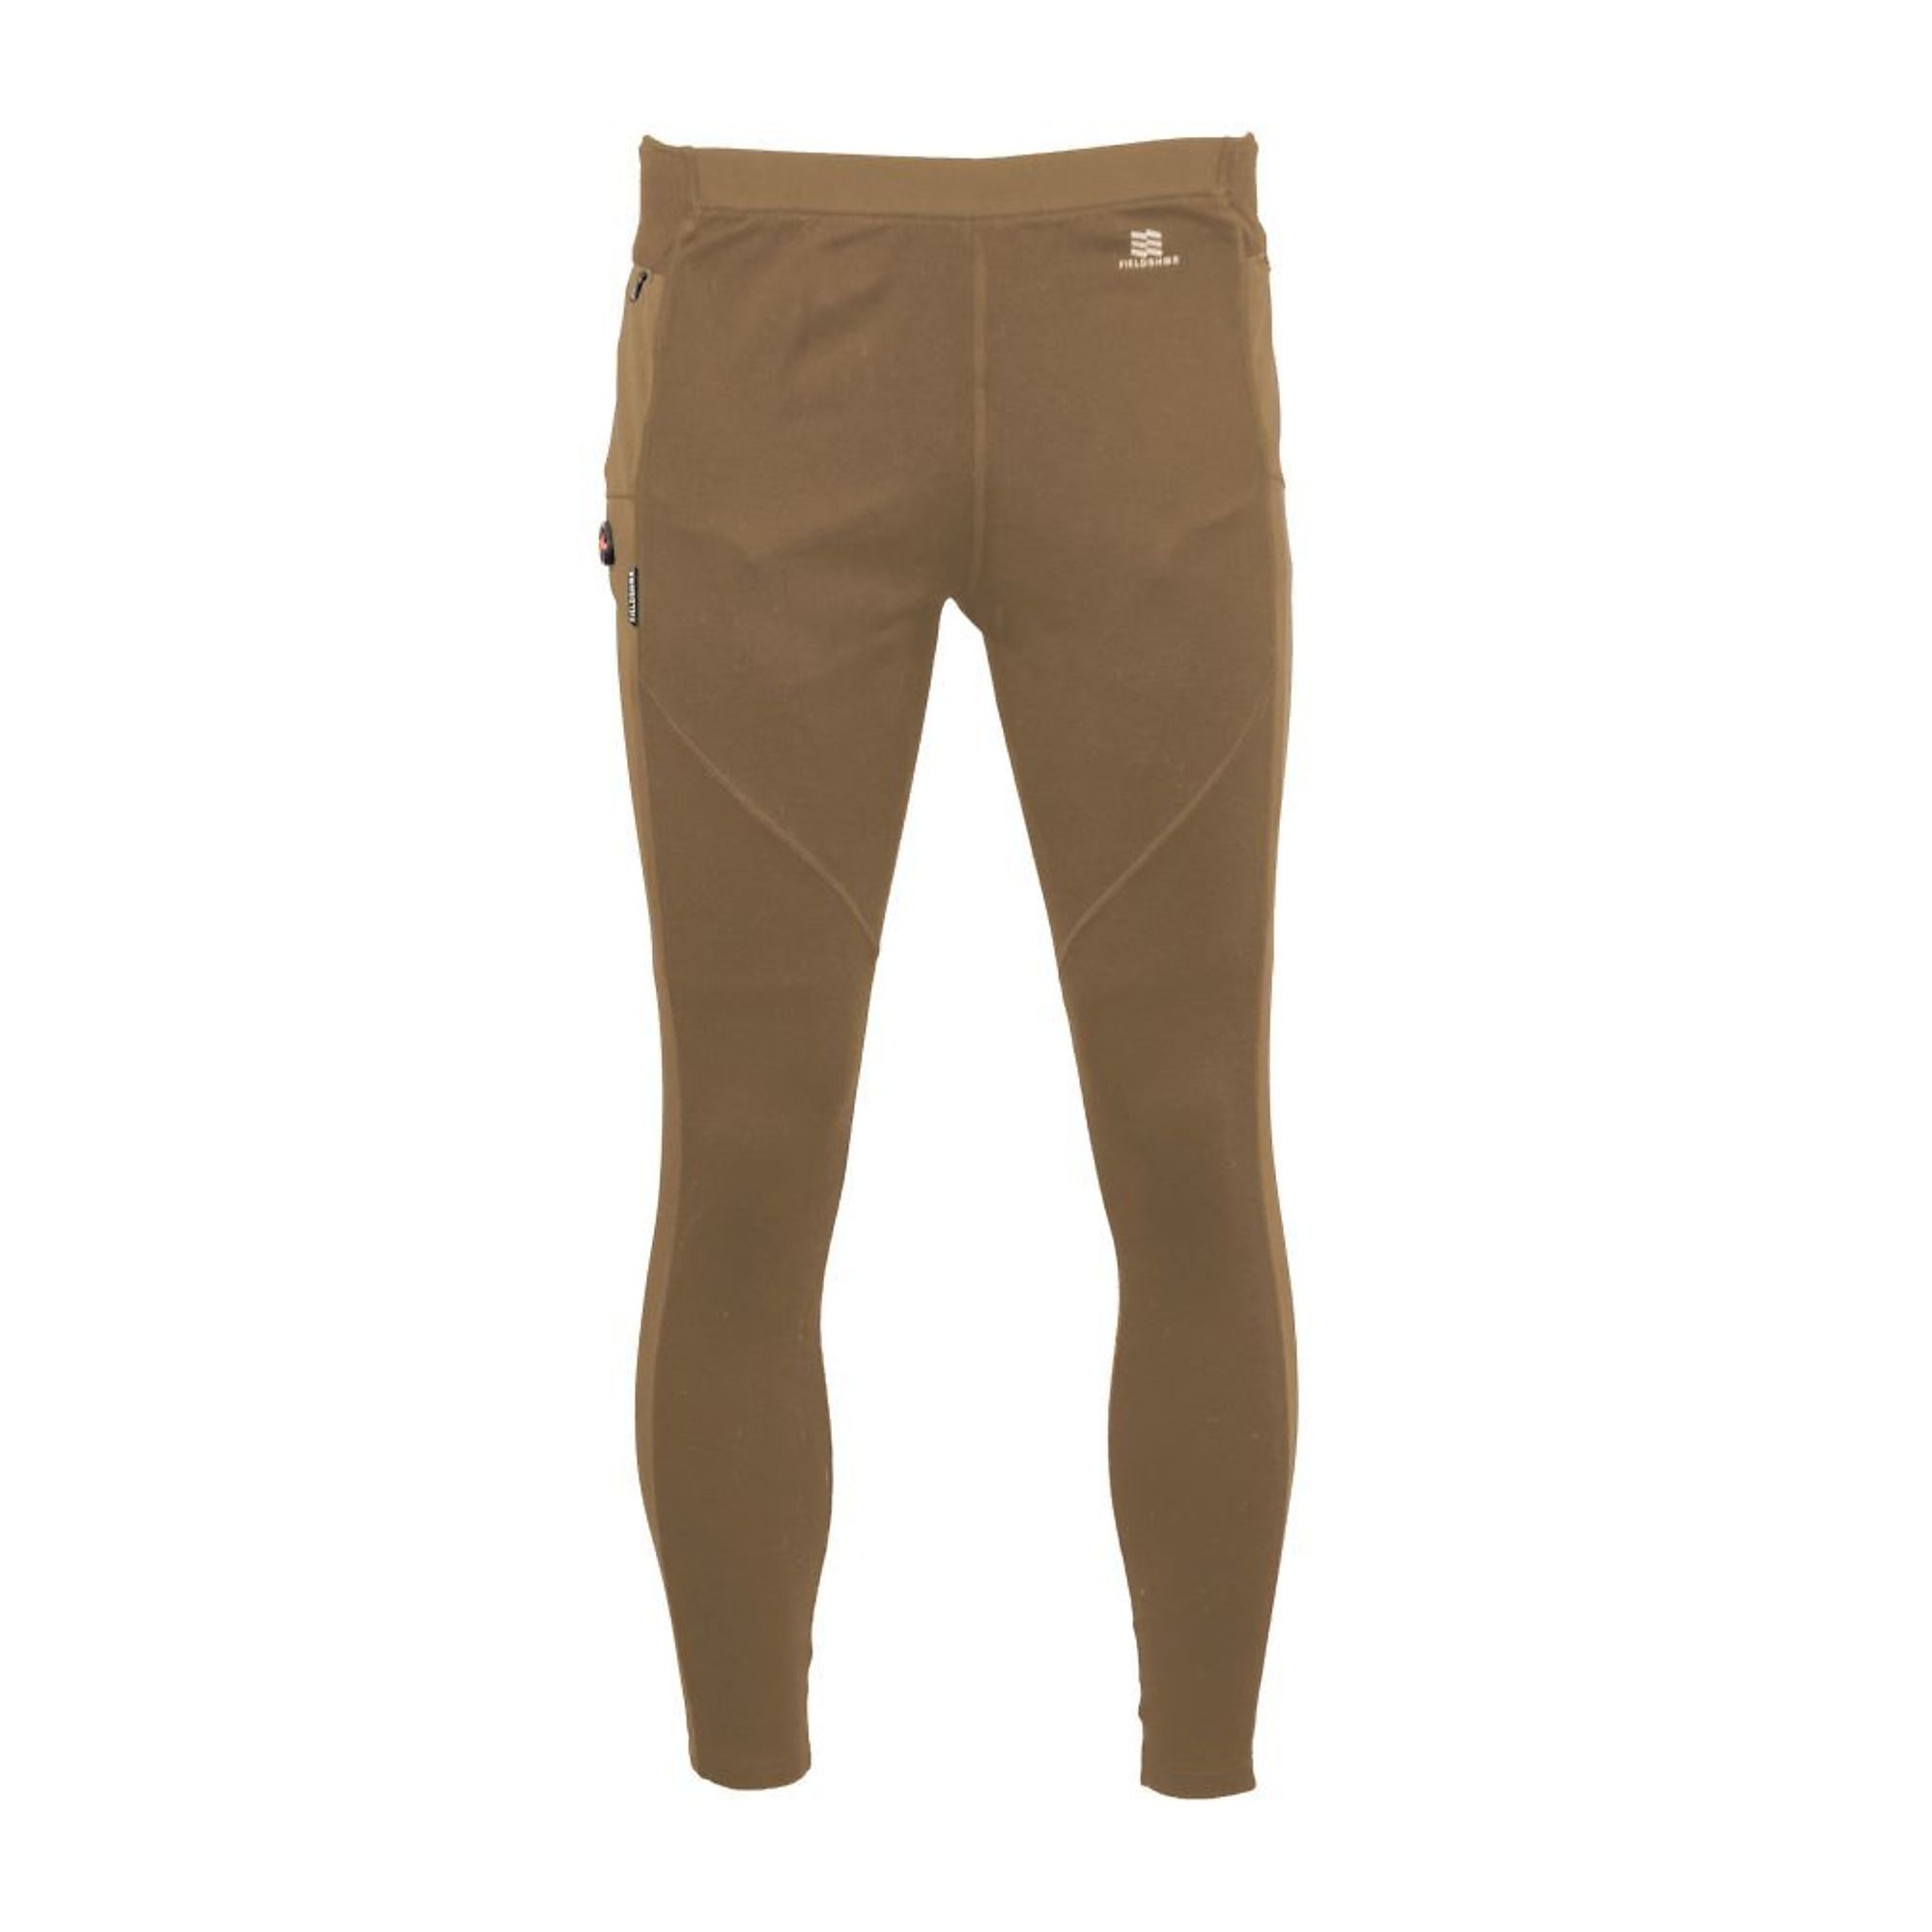 Fieldsheer, Men's Merino Heated Baselayer Pant, Size S, Color Morel, Model MWMP21340222